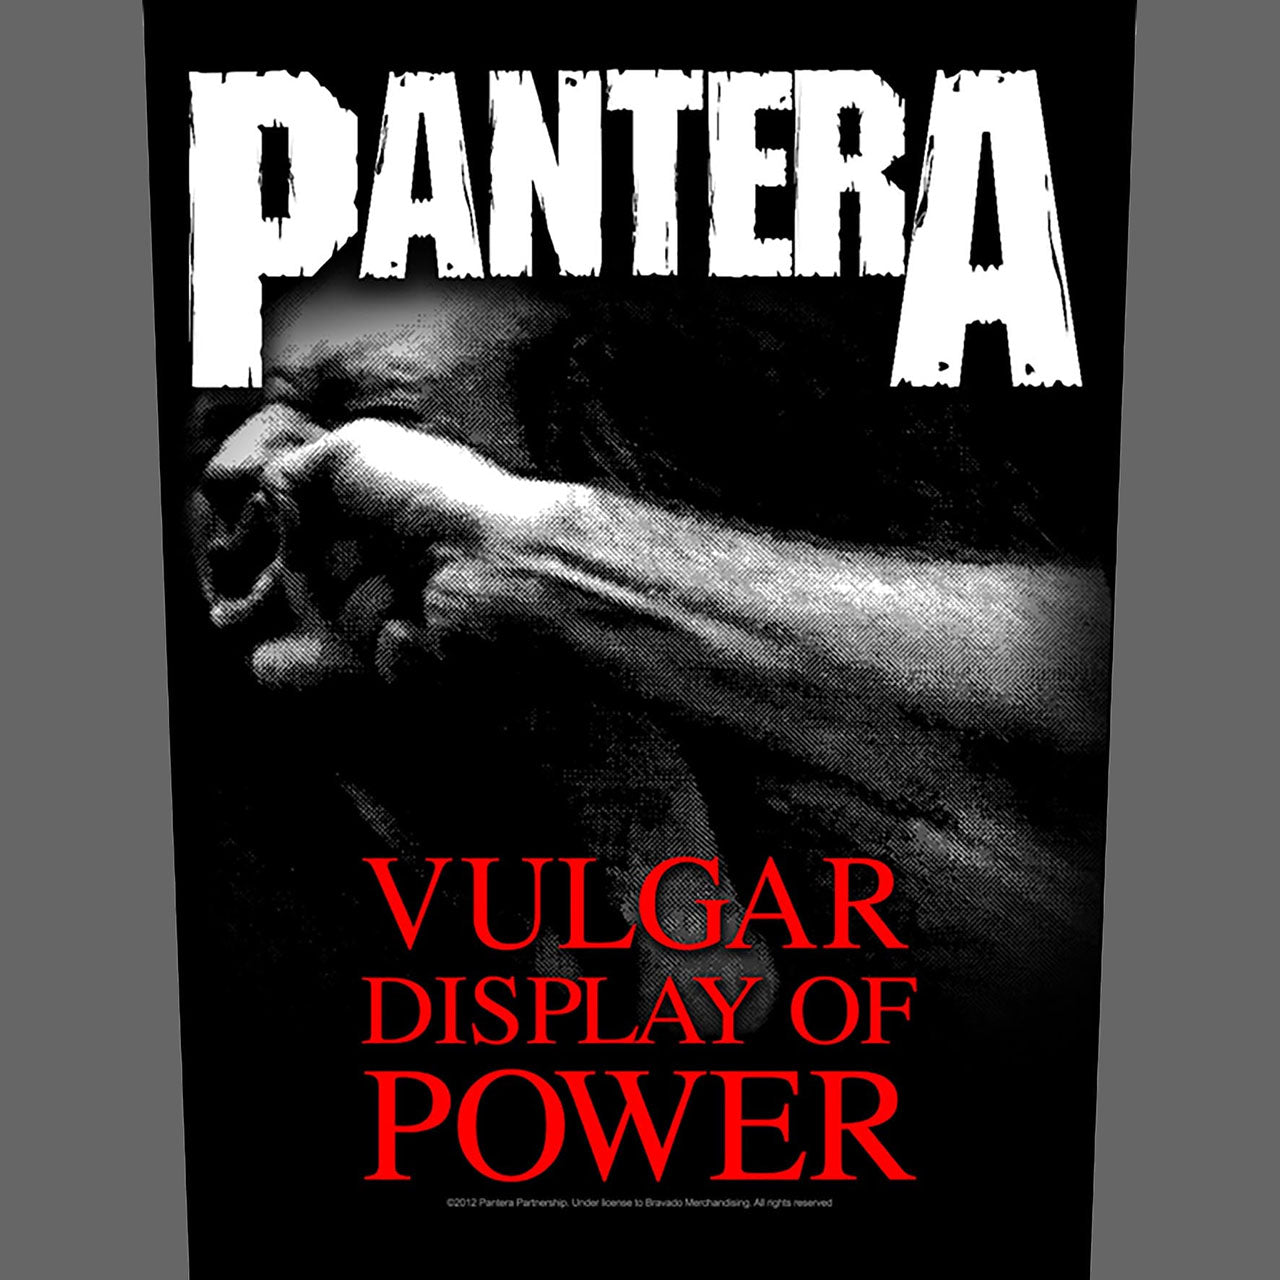 Pantera - Vulgar Display of Power (Backpatch)